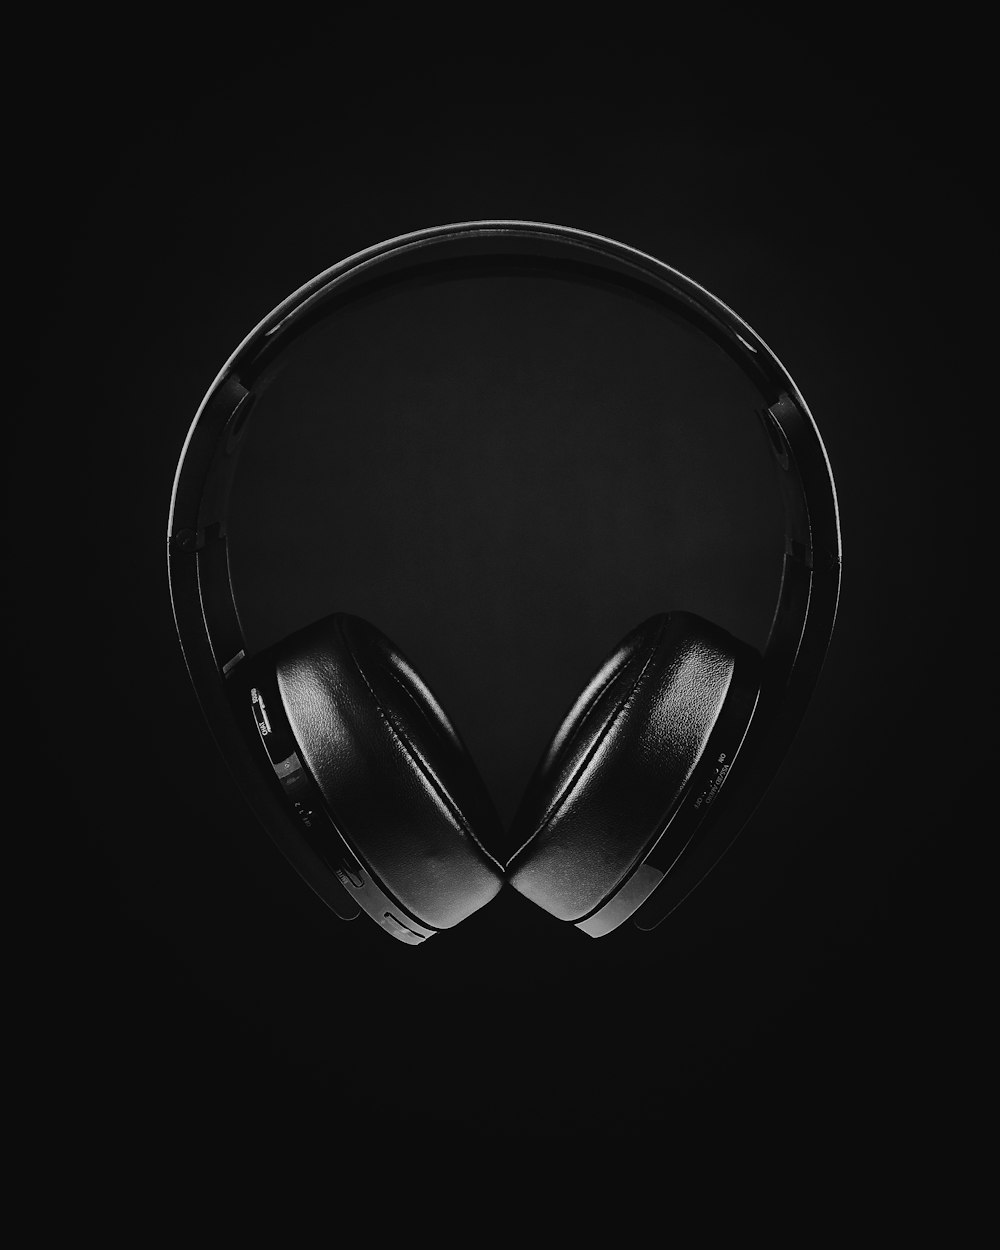 black and white photo of headphones